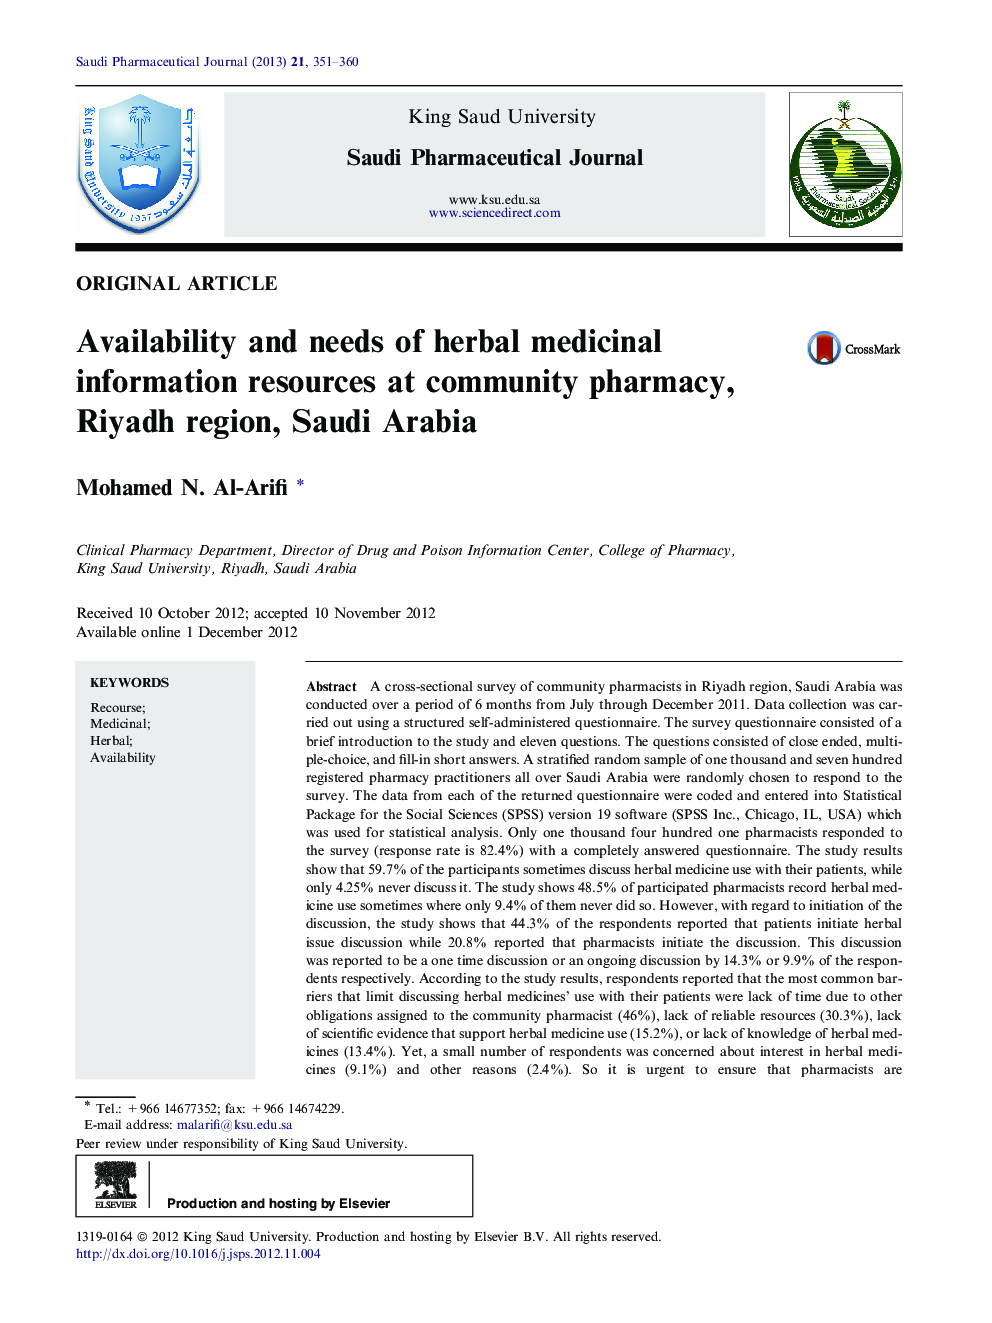 Availability and needs of herbal medicinal information resources at community pharmacy, Riyadh region, Saudi Arabia 